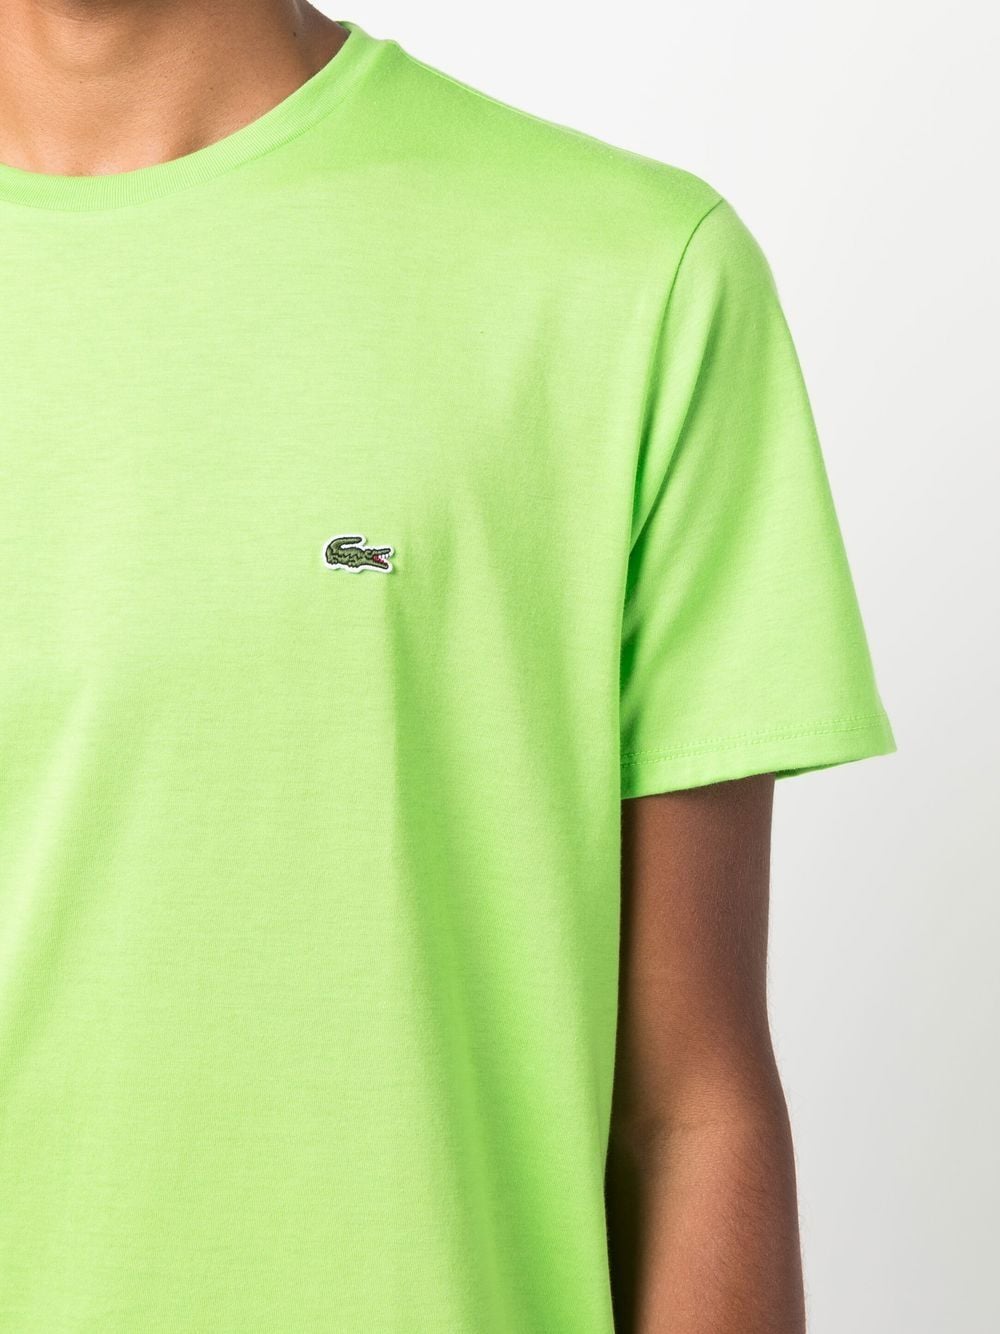 t-shirt with fluorescent green logo